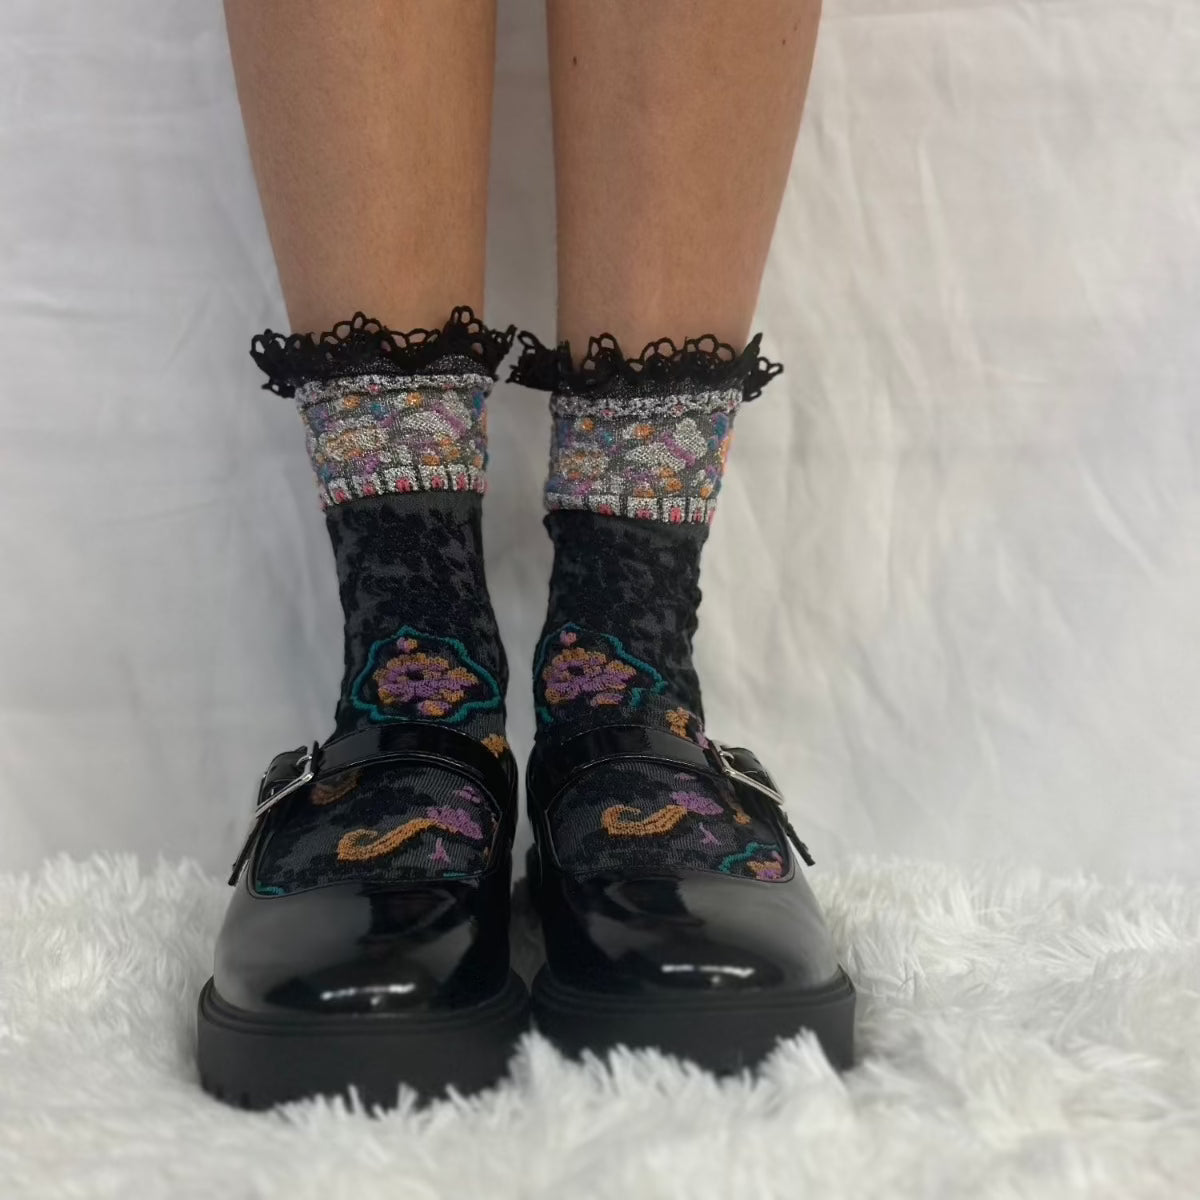 HELLO BIRDY knit lace top black crew sock - eye candy sock, women's funny ankle socks, colorful print novelty socks women.